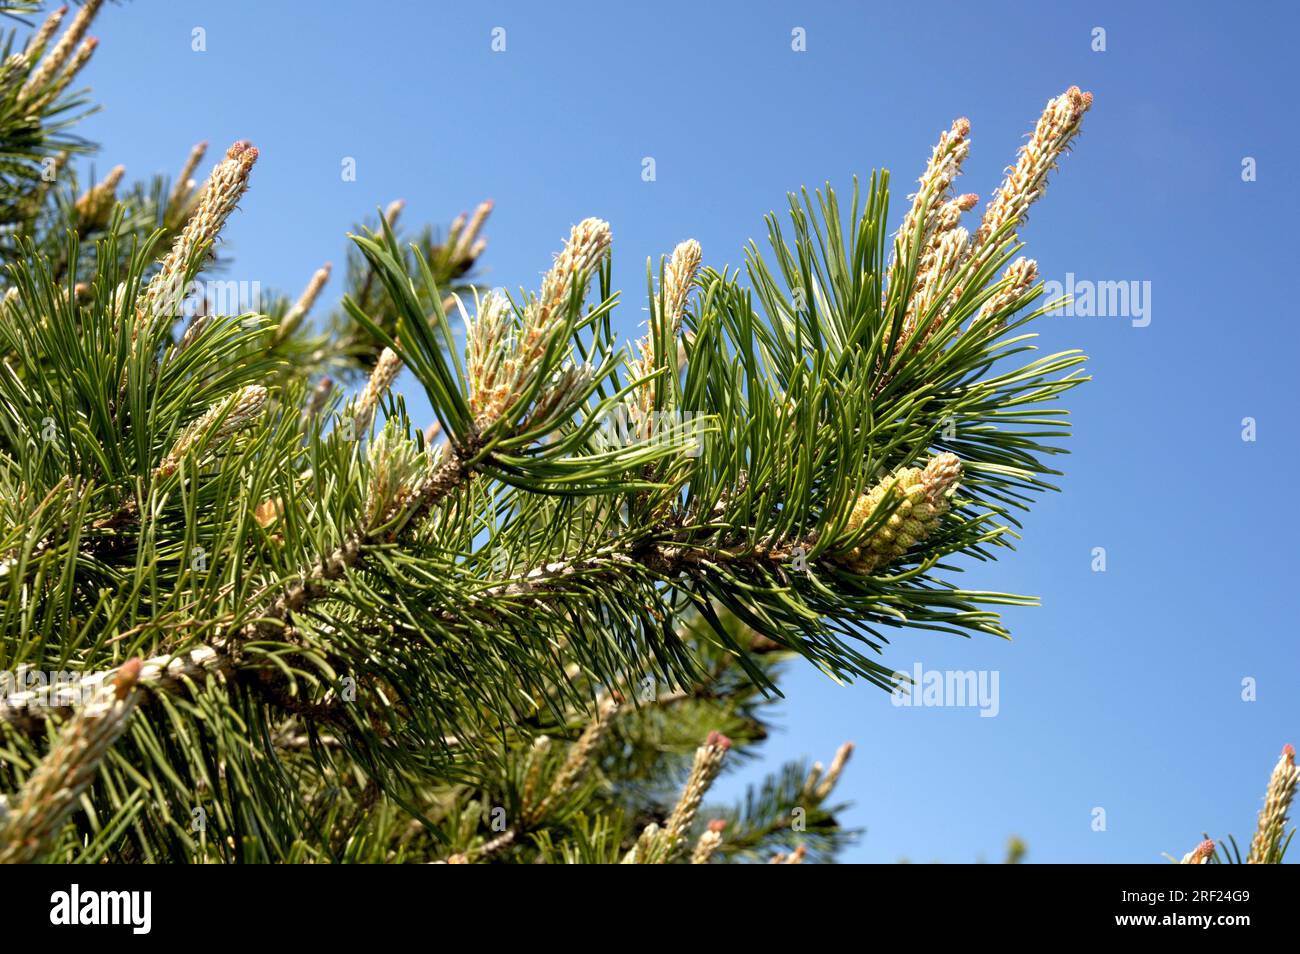 Mountain pine (Pinus mugo), mountain pine, mountain dwarf pine, mountain pine, dwarf pine Stock Photo